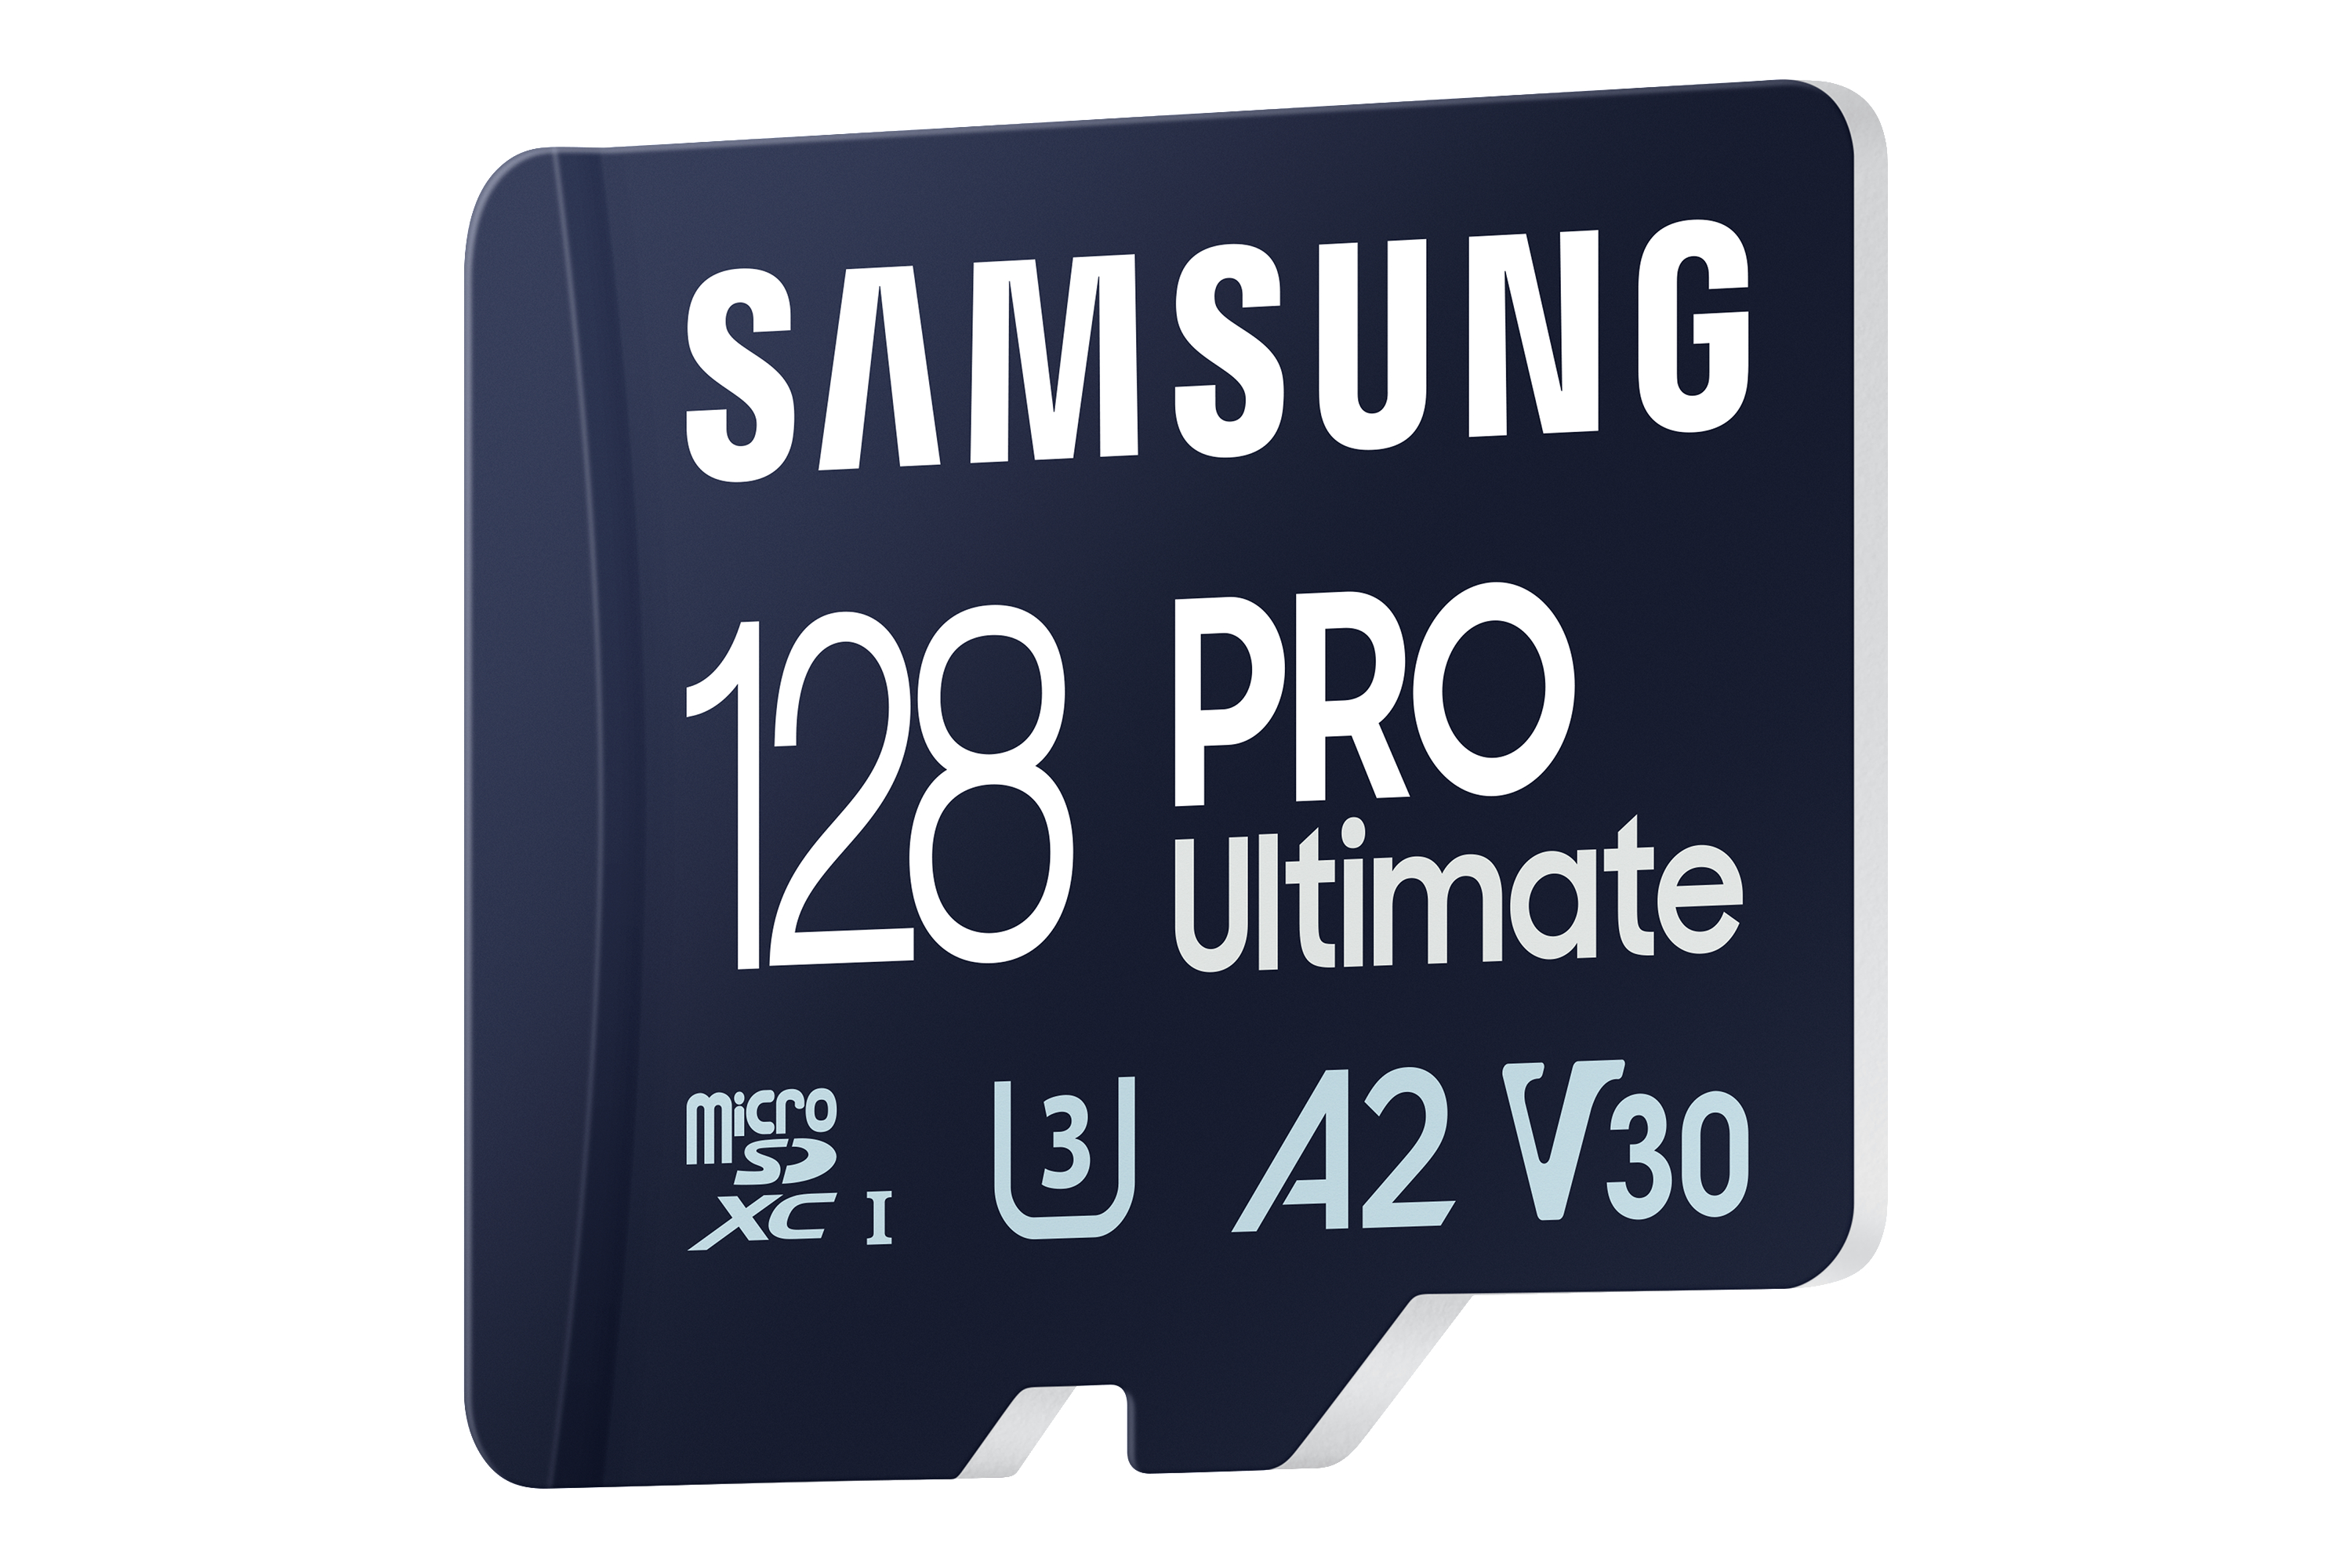 Ultimate, 128 PRO 200 SAMSUNG MB/s GB, Speicherkarte, Micro-SD